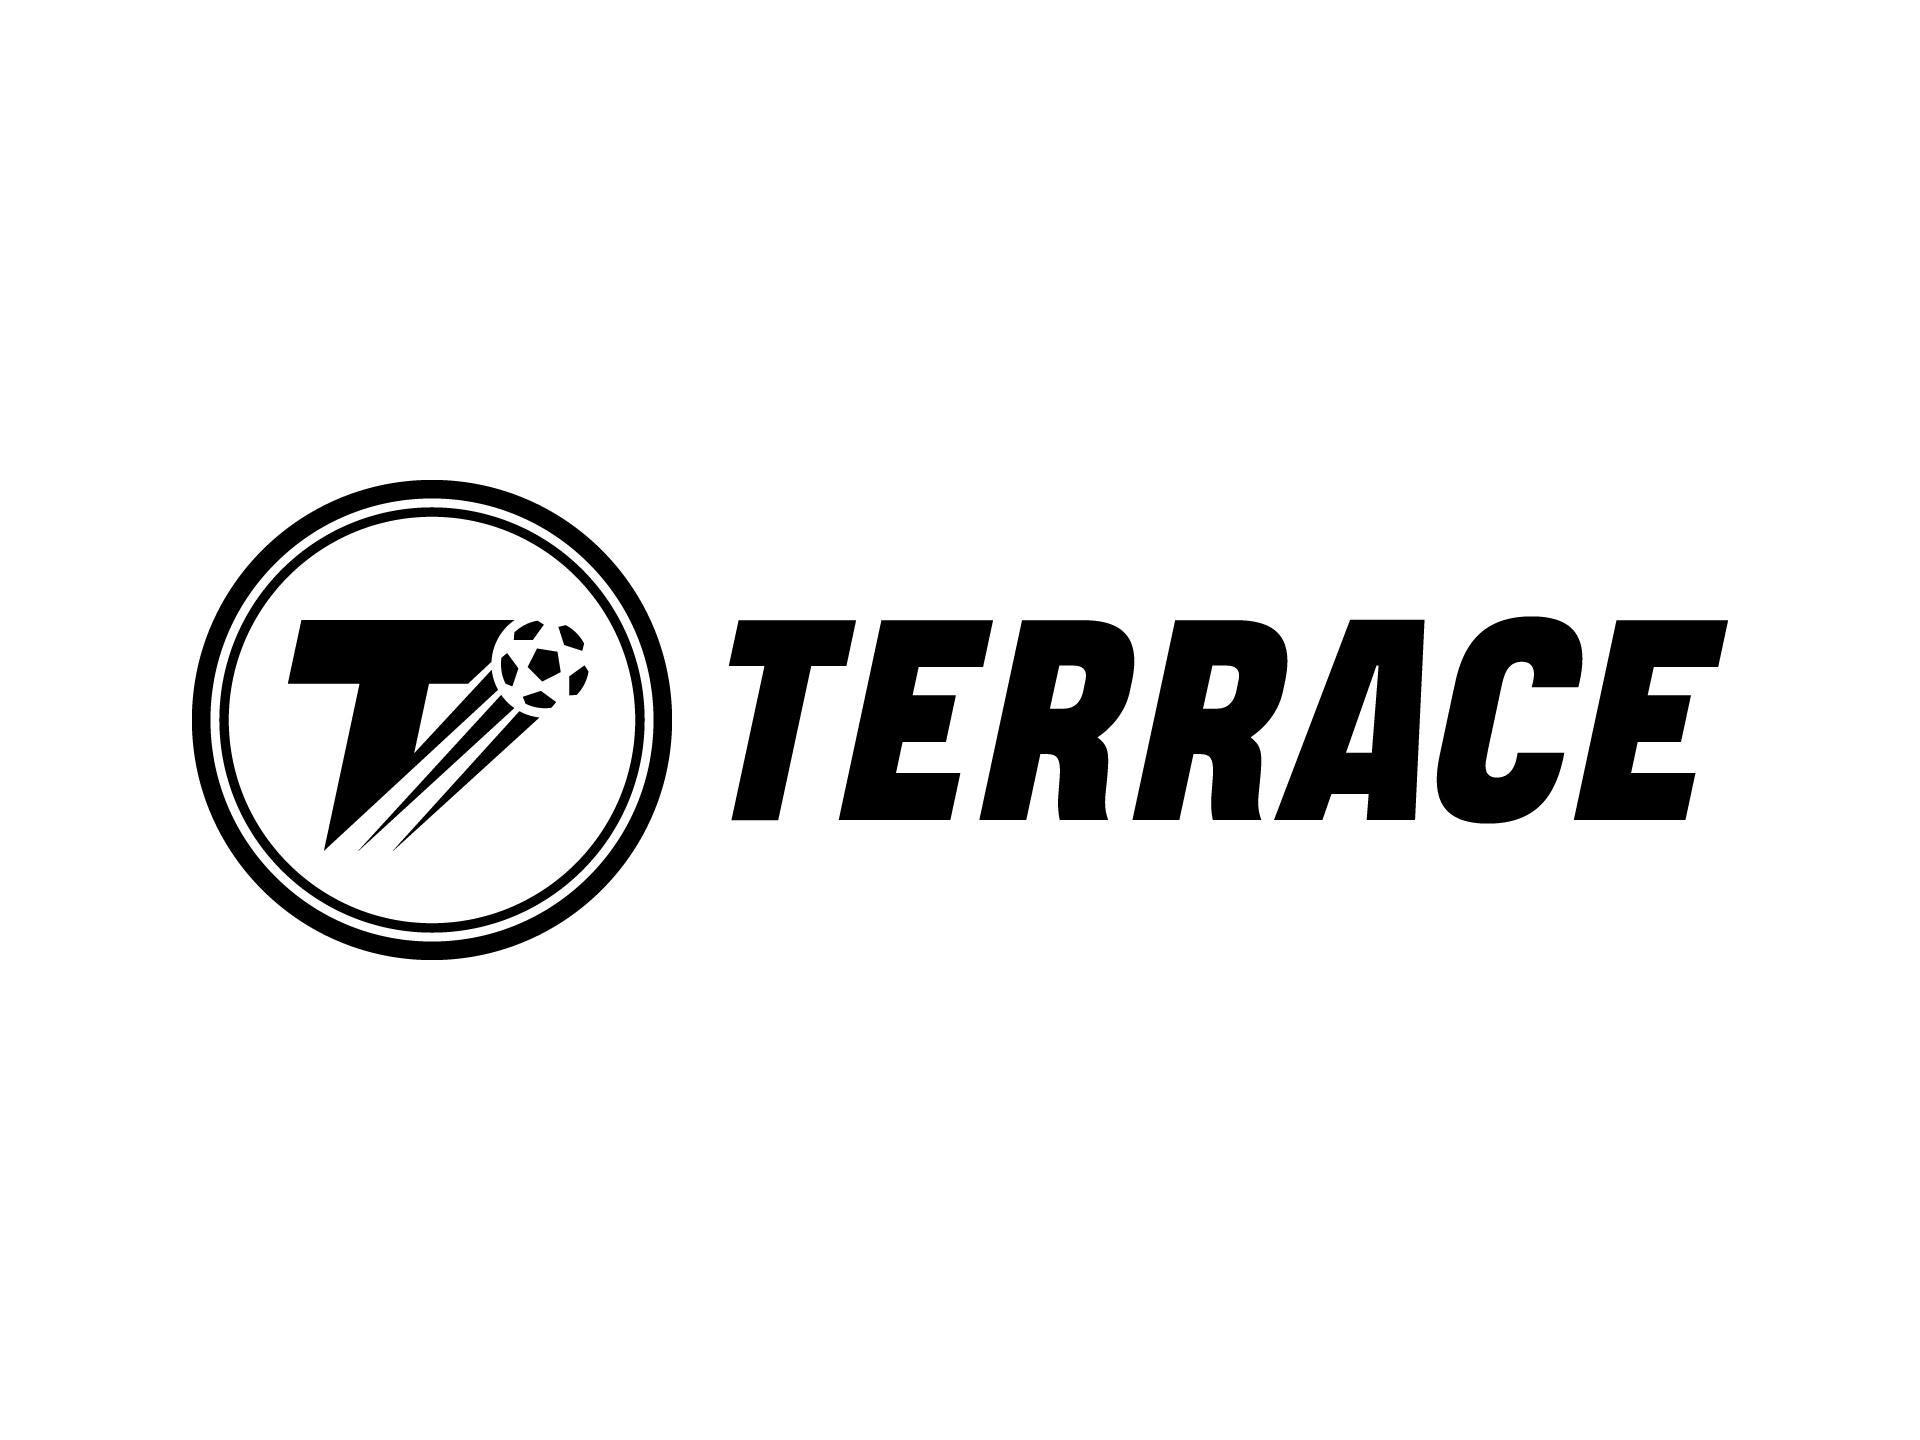 The Terrace logo.